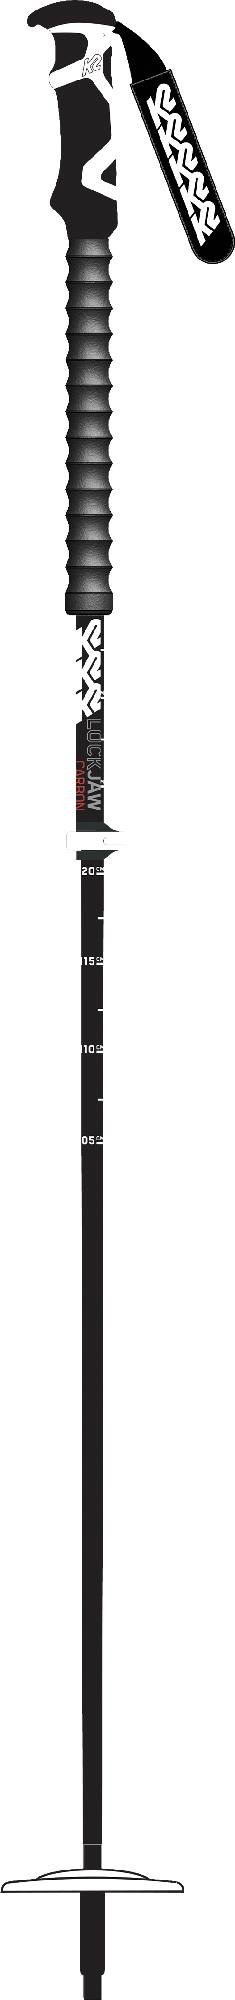 K2 LockJaw Carbon 105-145cm